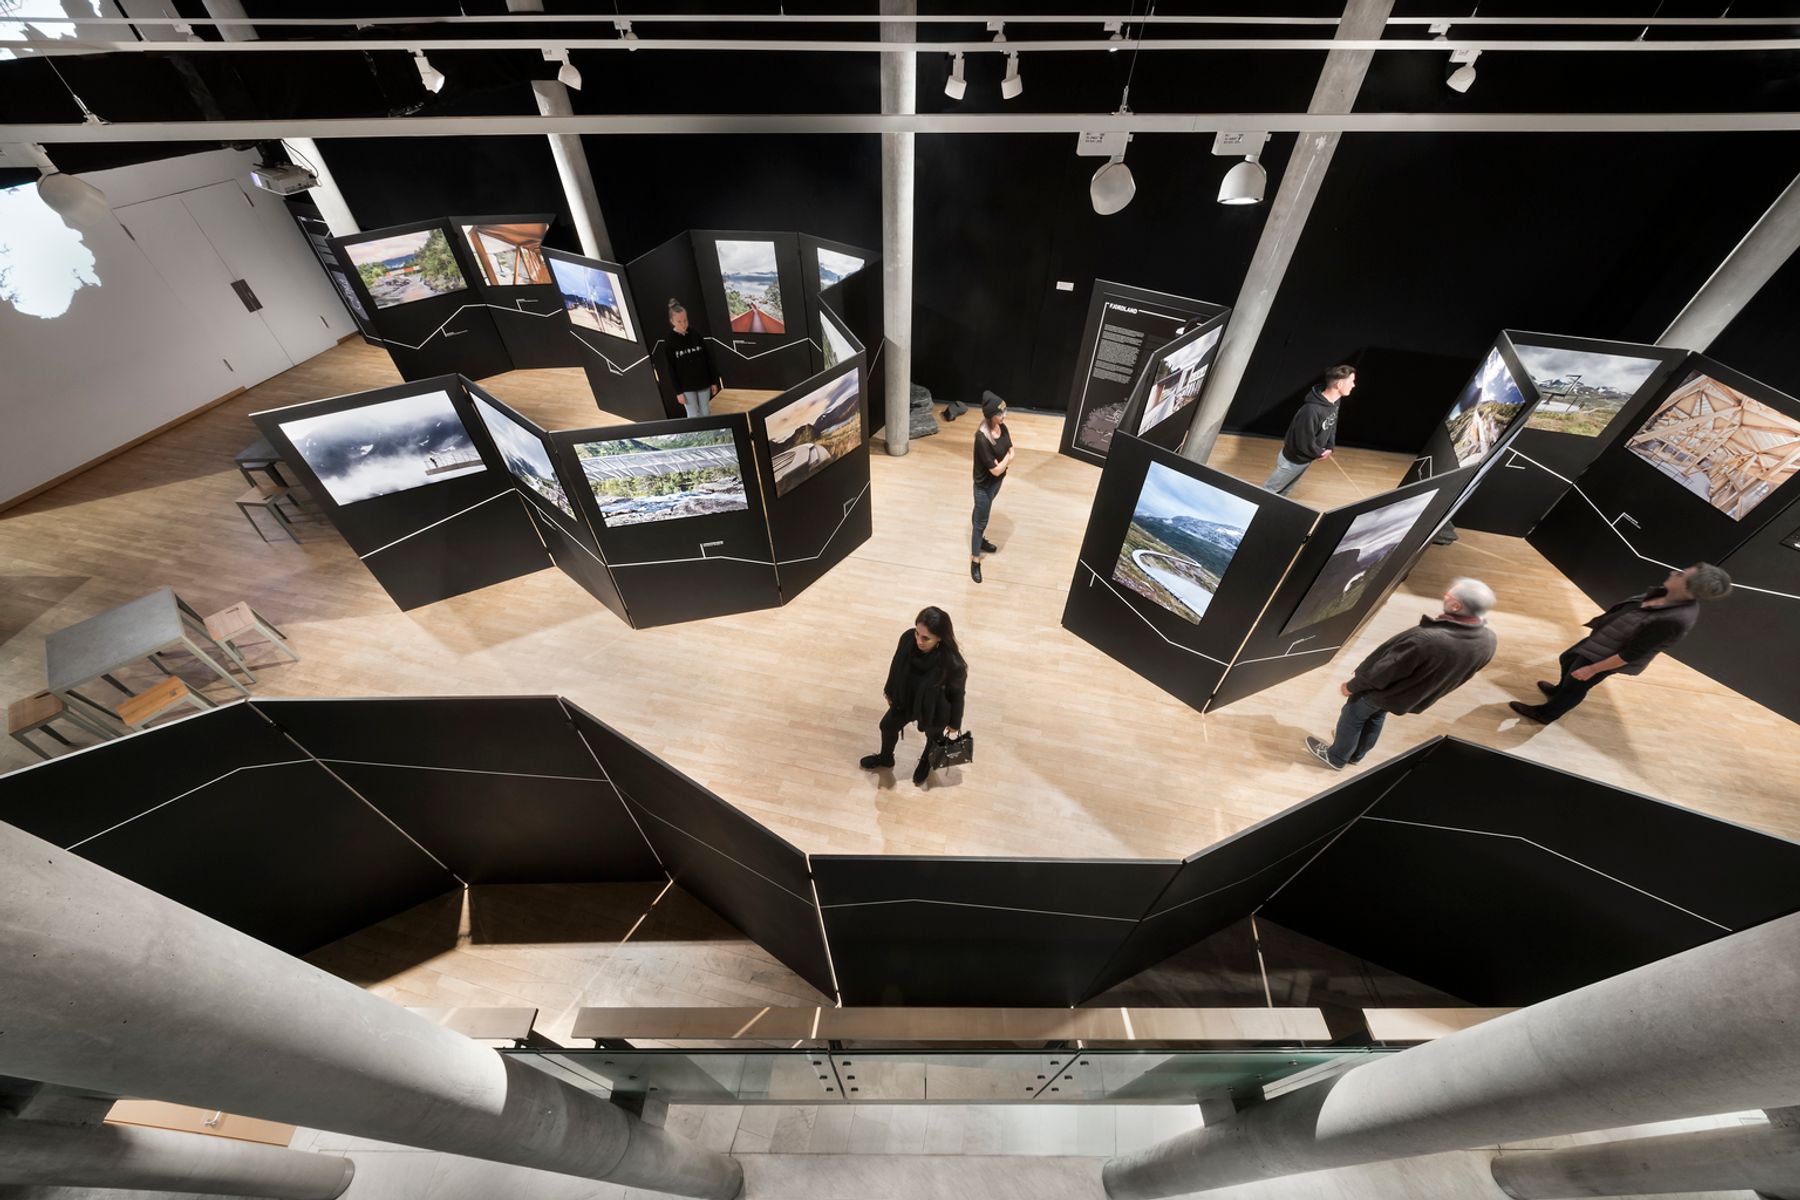 Exposición «Arquitectura y Paisaje en Noruega» de Ken Schluchtmann en las Embajadas de los Países Nórdicos, Berlín. Fotografía: Ken Schluchtmann / diephotodesigner.de, Berlín.